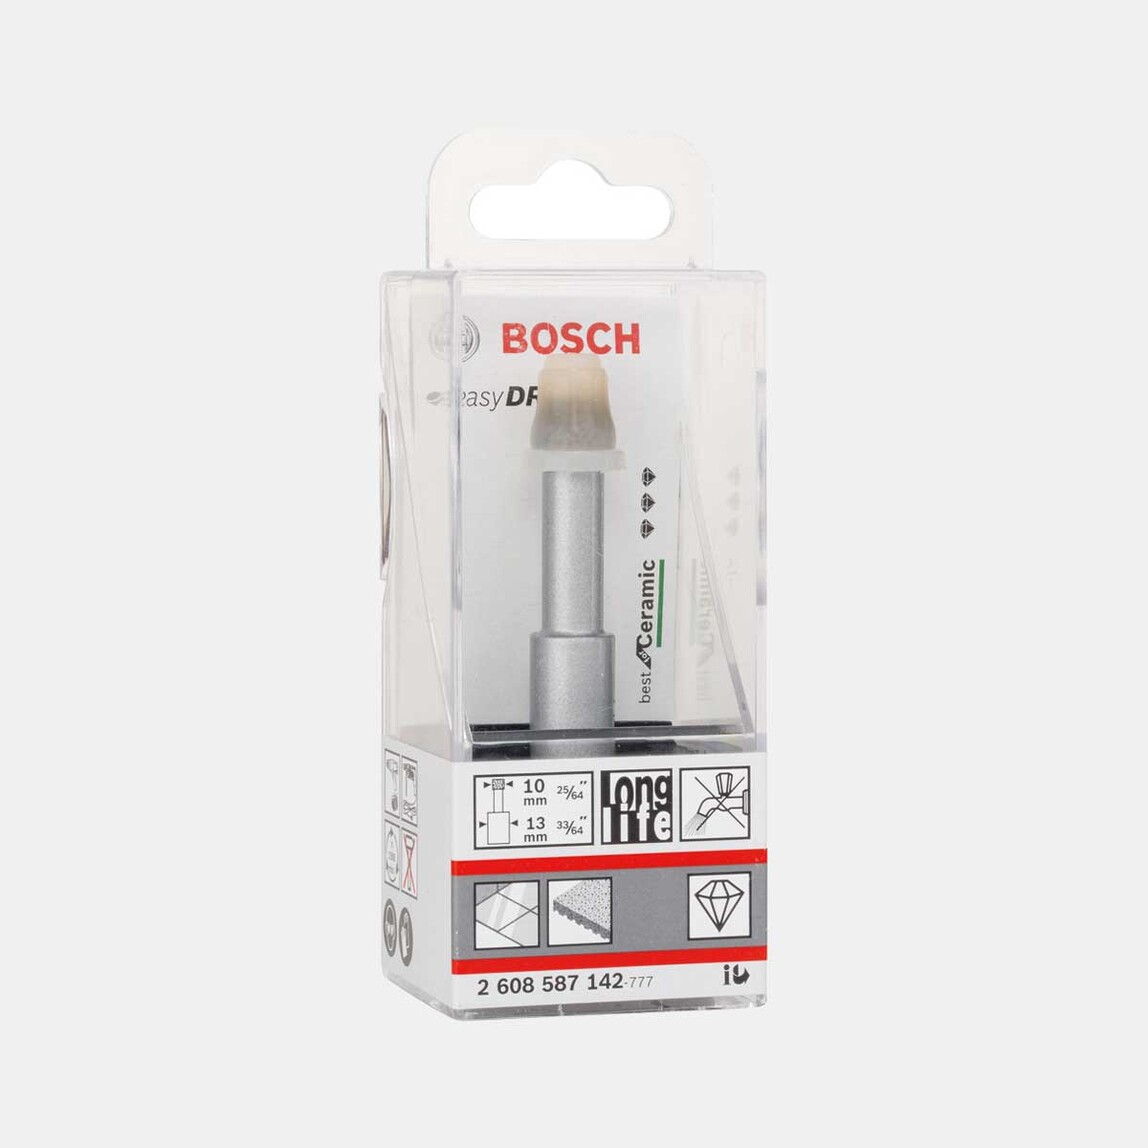    Bosch Diamant Bohrer 10 mm   